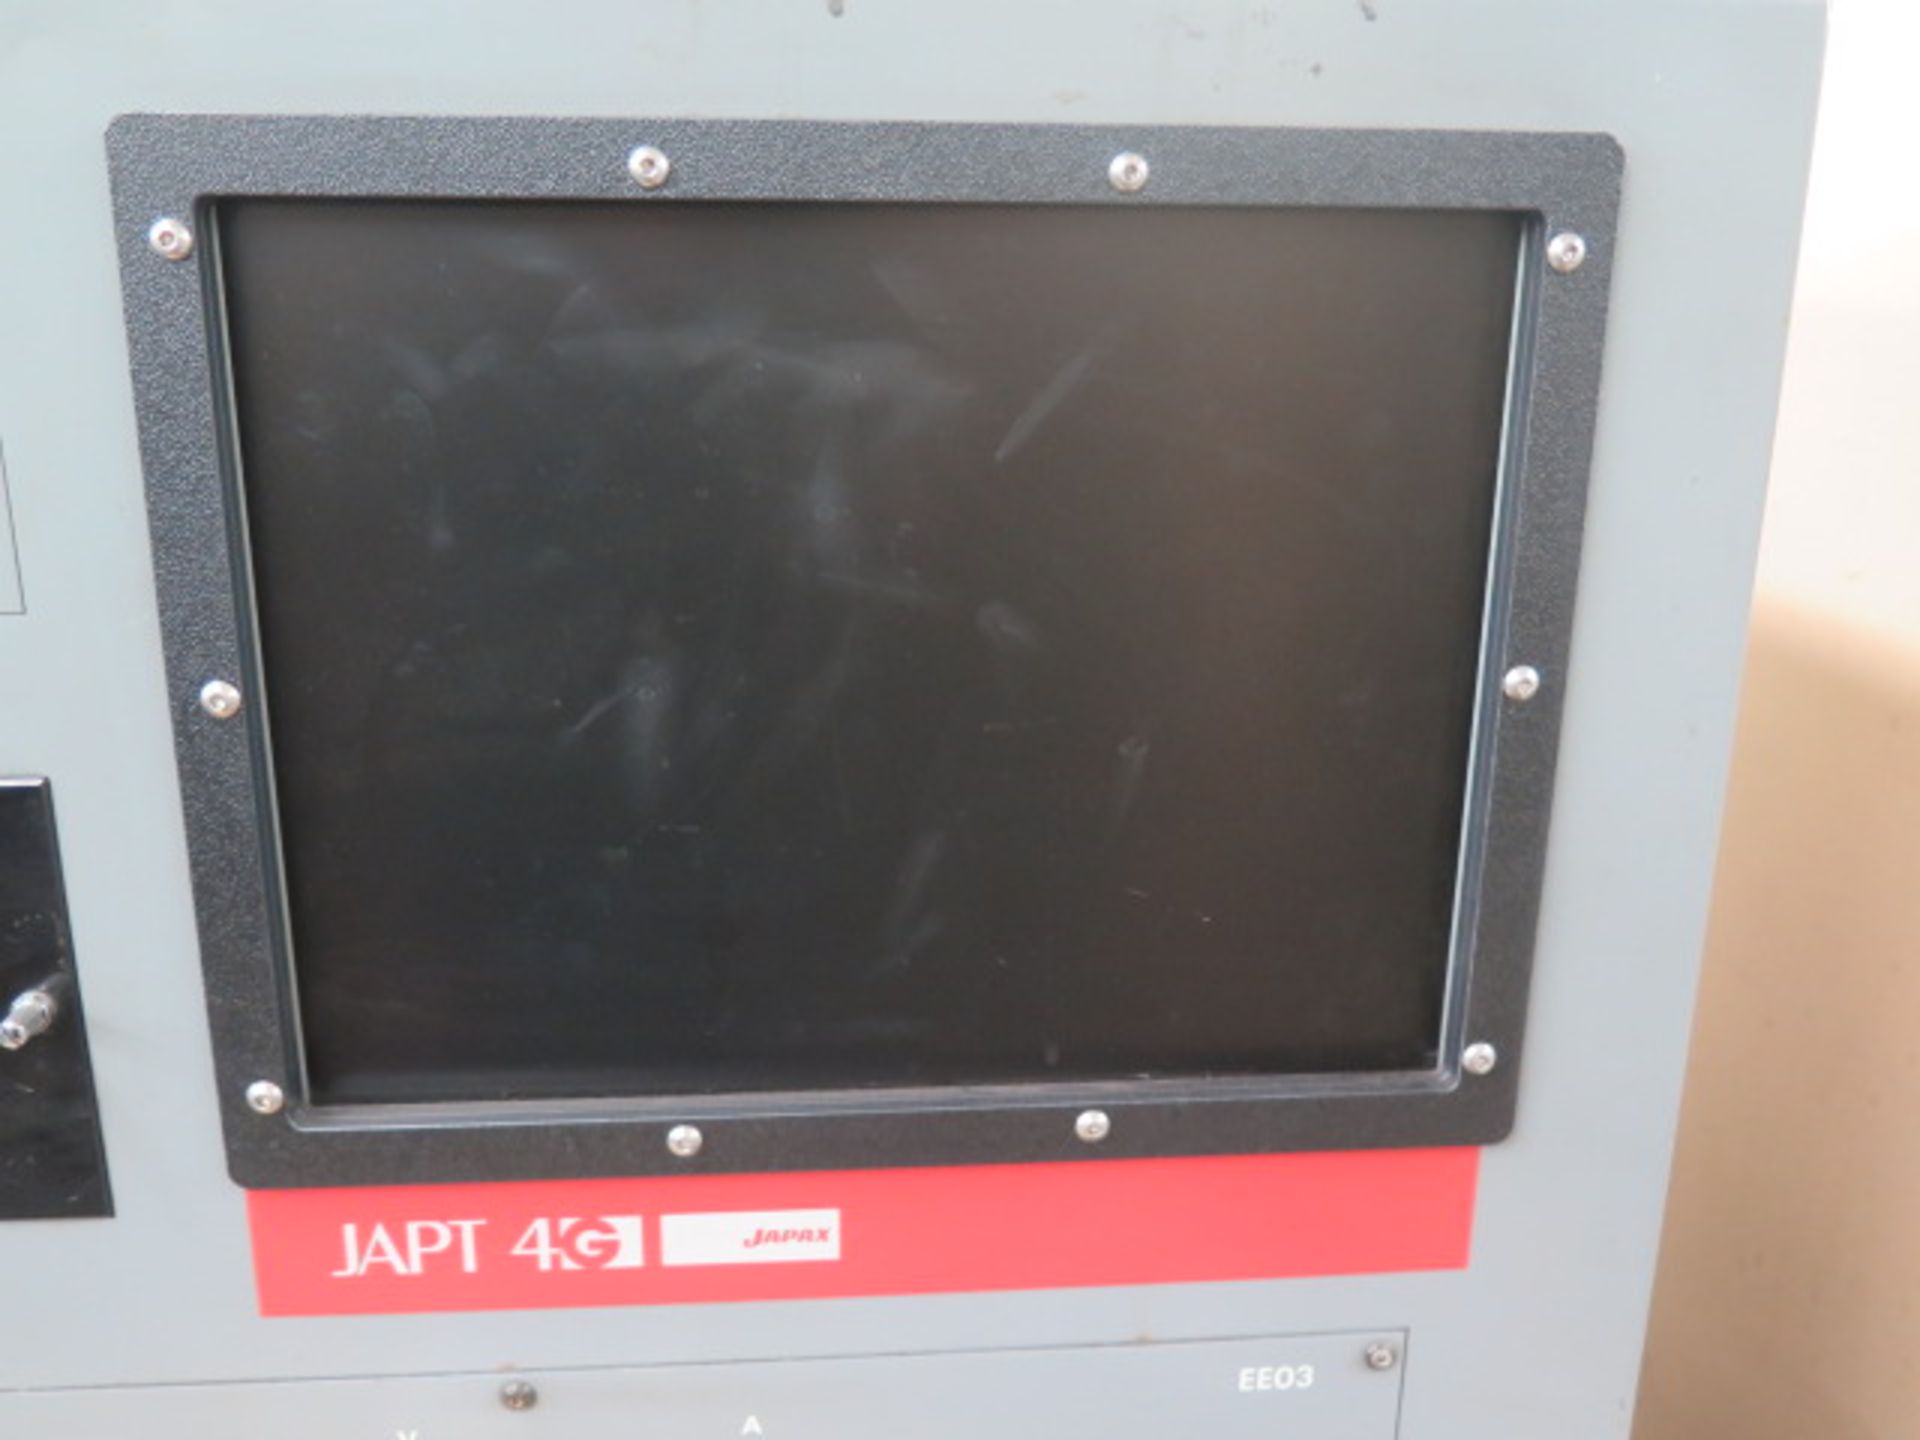 Japax LDM 35 CNC Wire EDM Machine s/n 939-02-038 w/ JAPT 4G Controls, Remote Controller, 12” x 15” - Image 5 of 15